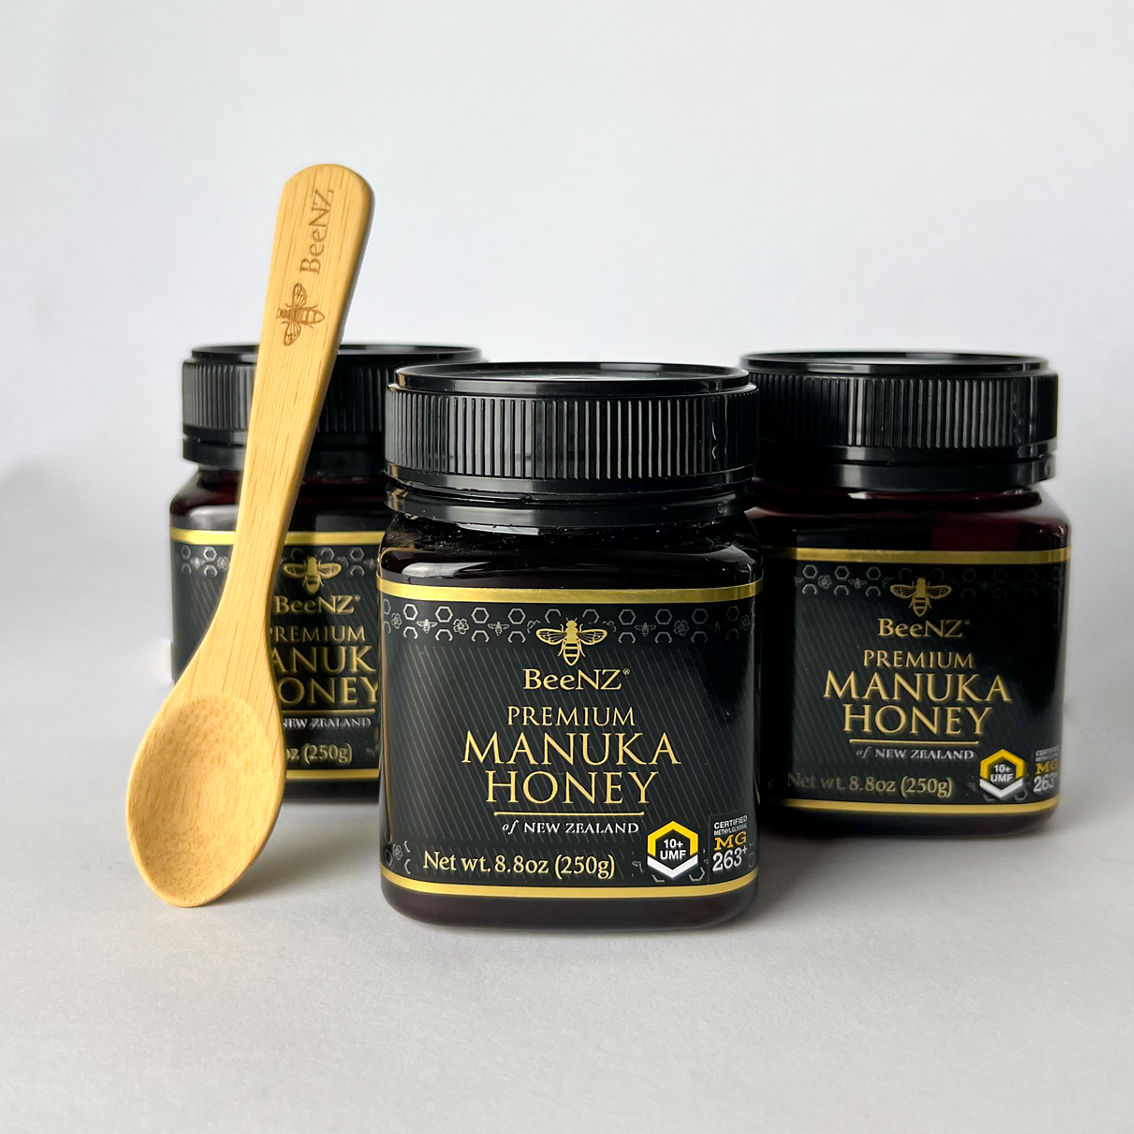 BeeNZ Premium Manuka Honey UMF10, Qty 3, 8.8 oz. each - Image 3 of 3